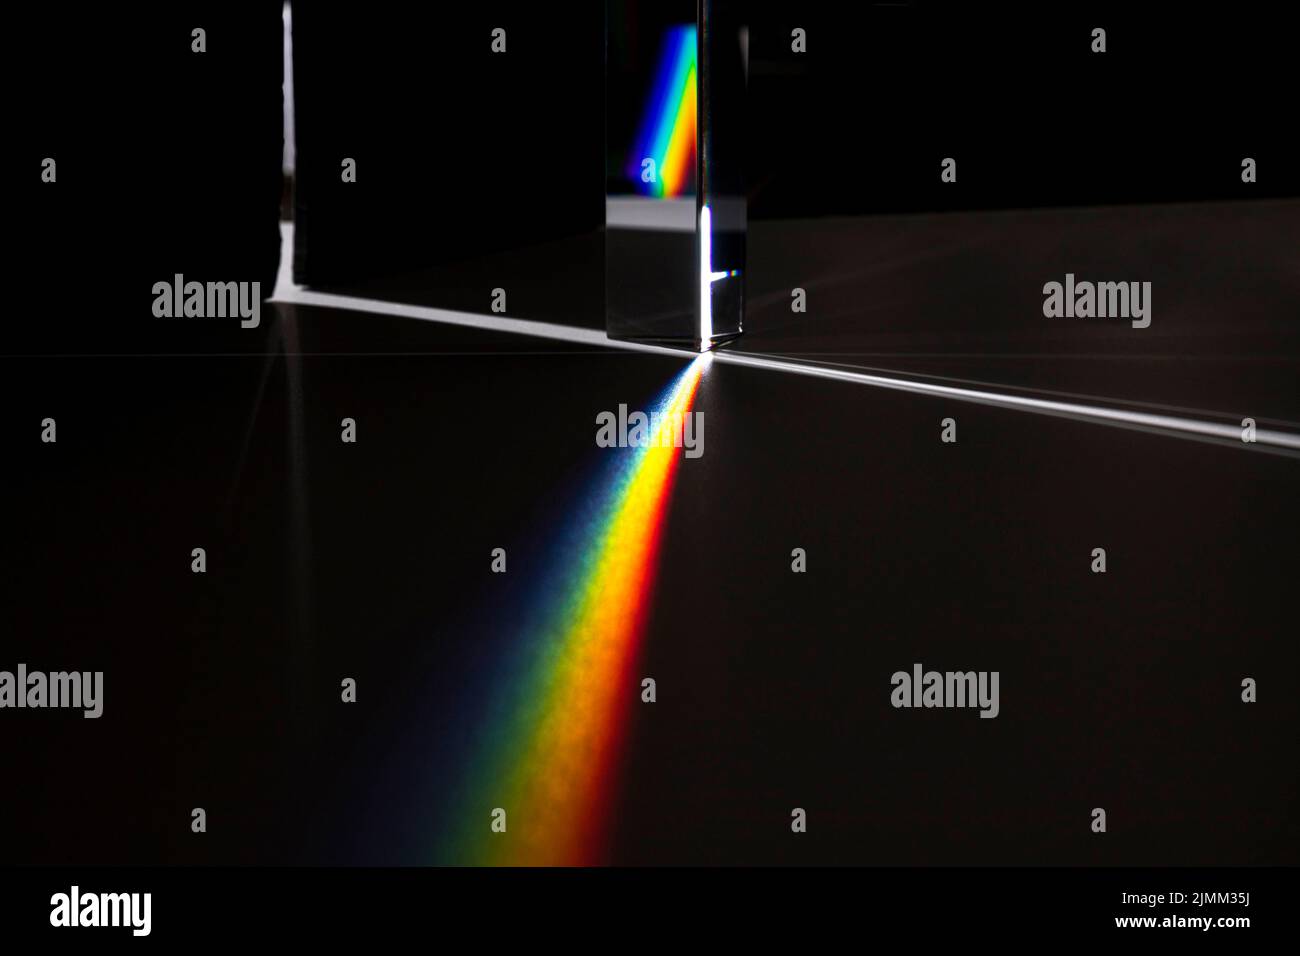 Prism dispersing light concept Stock Photo